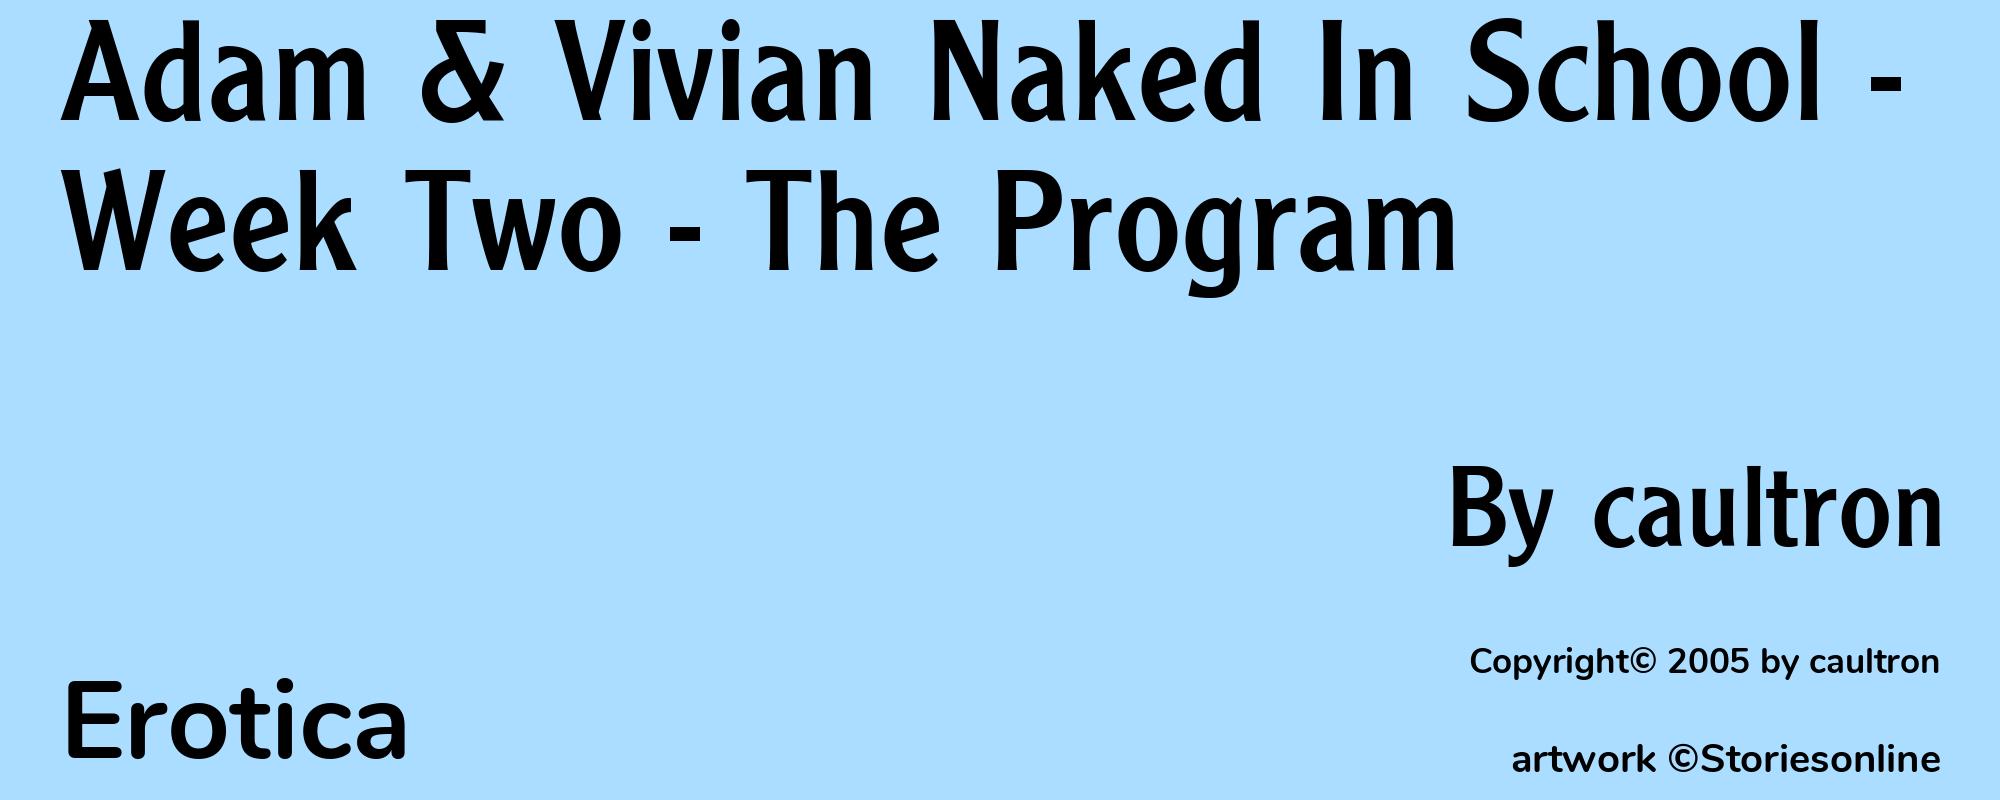 Adam & Vivian Naked In School - Week Two - The Program - Cover